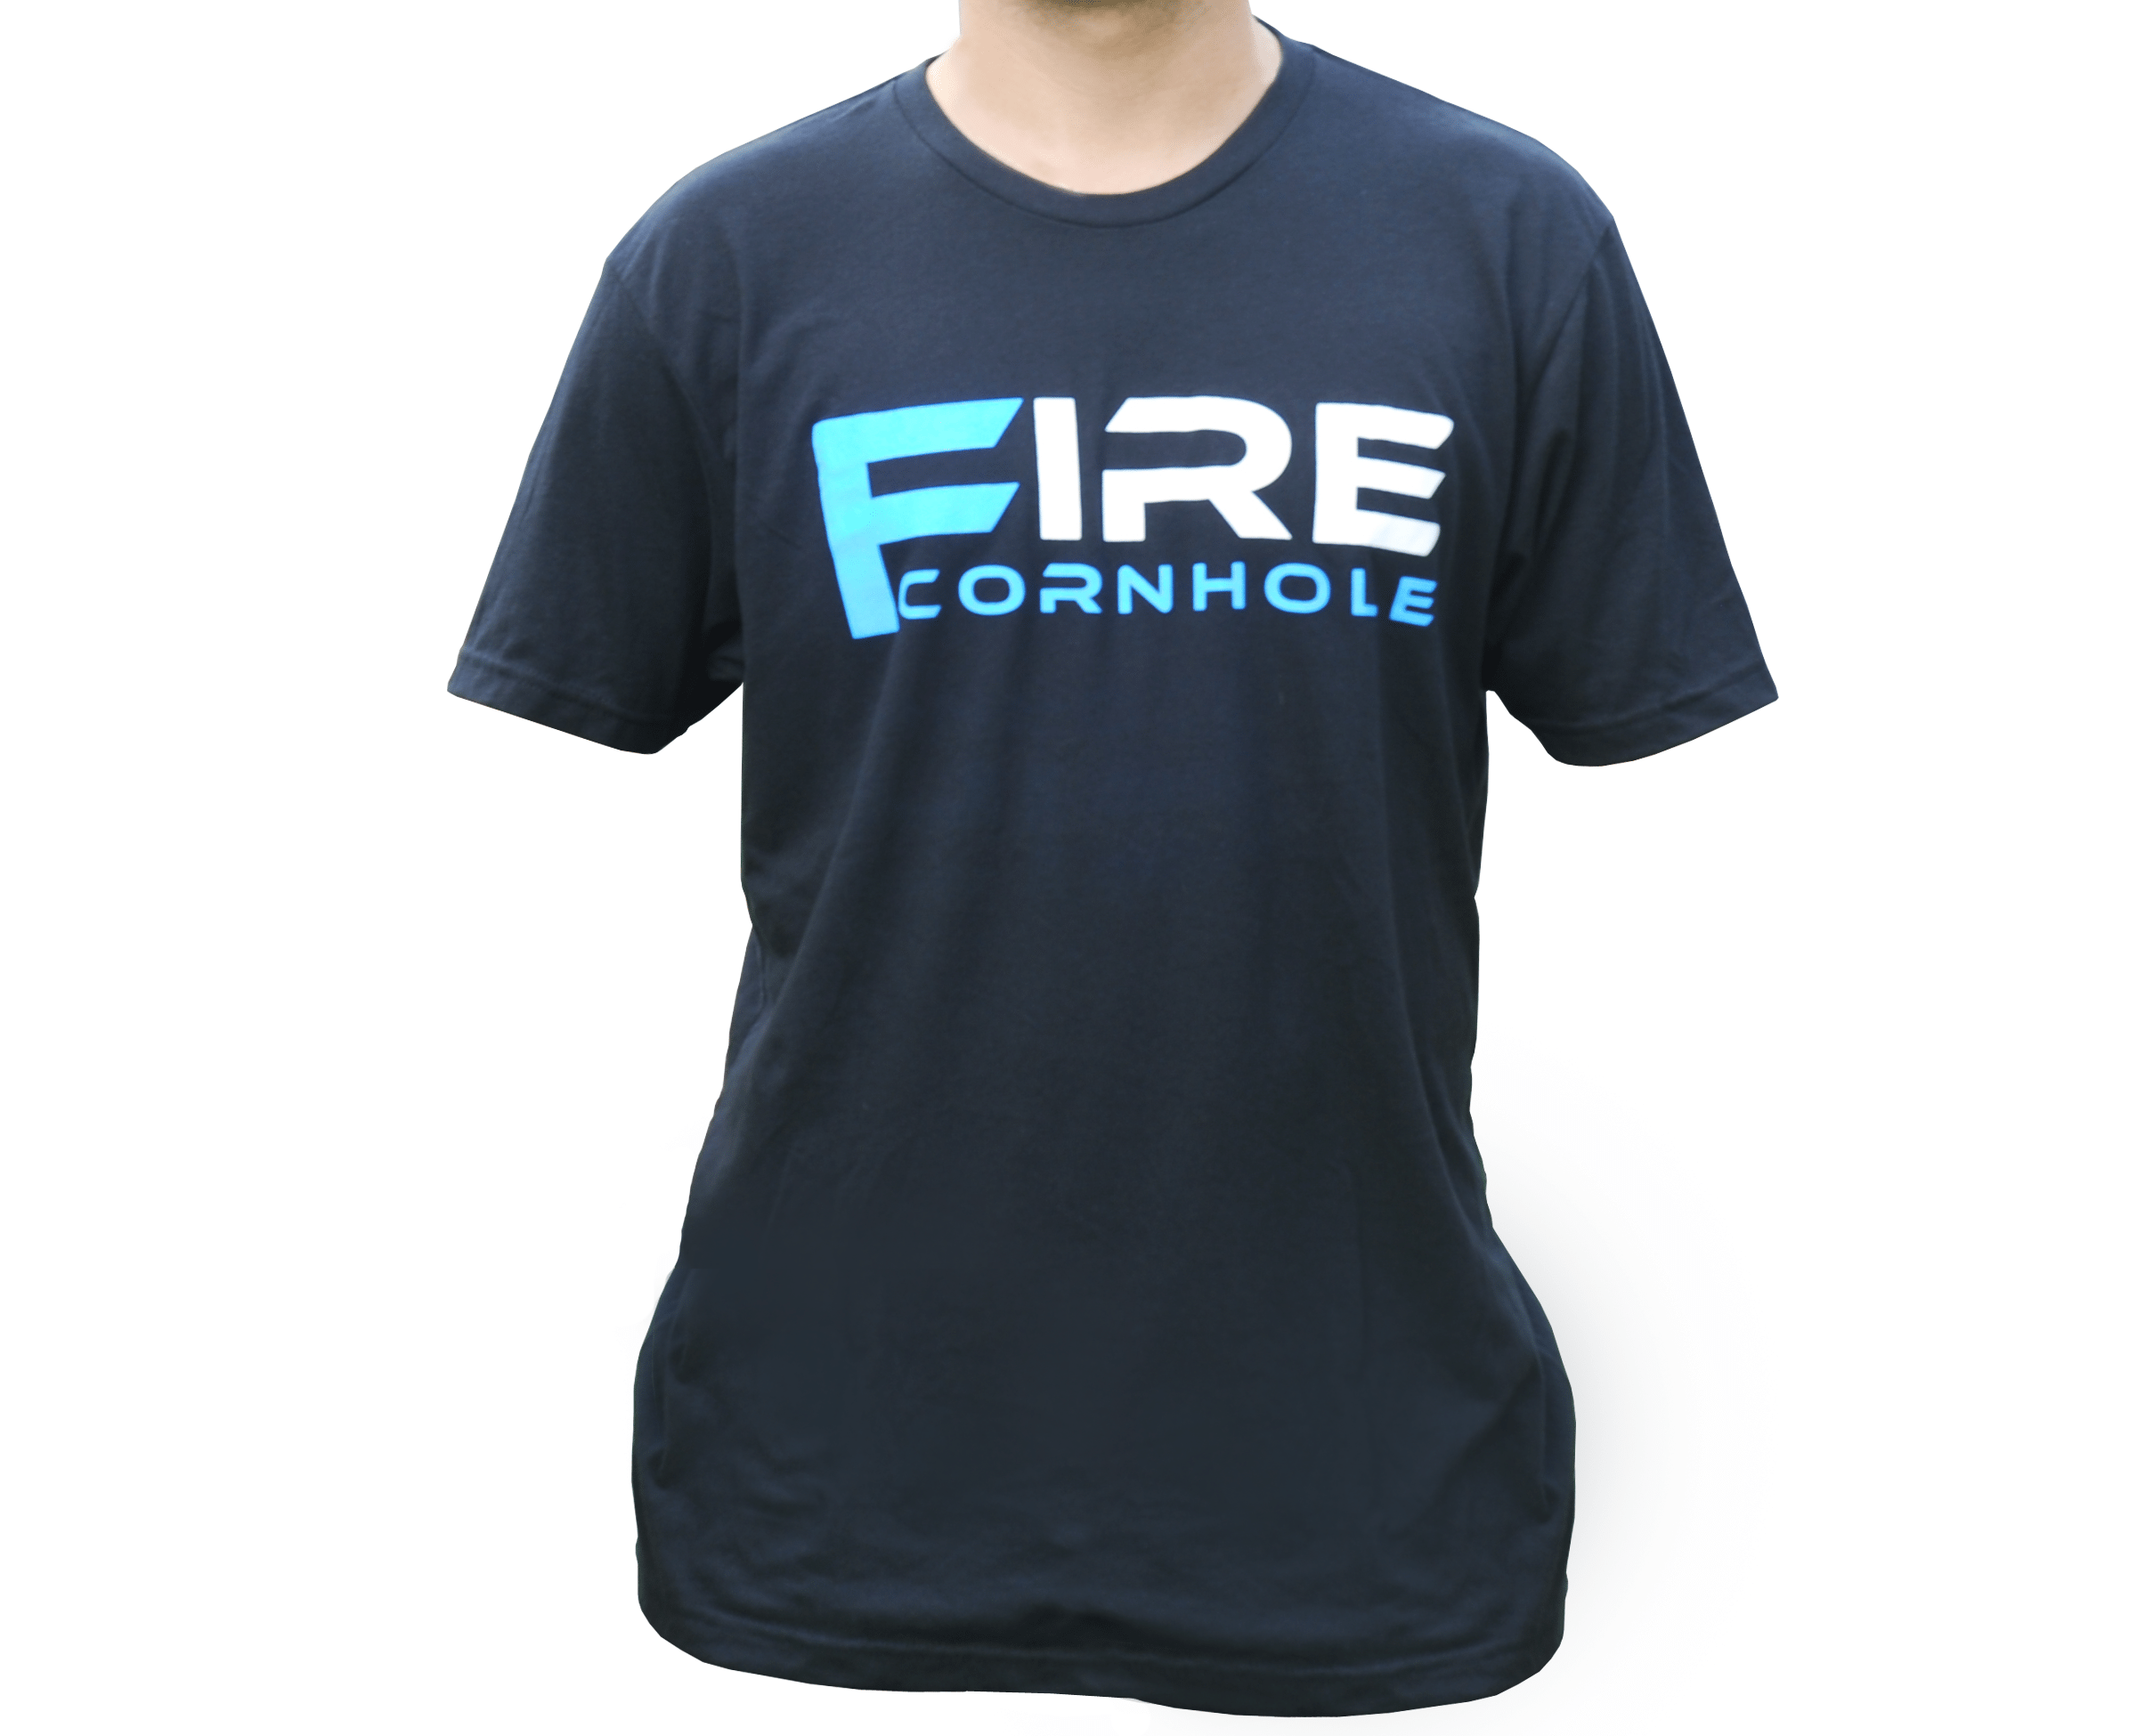 Fire Cornhole Black shirt with blue logo